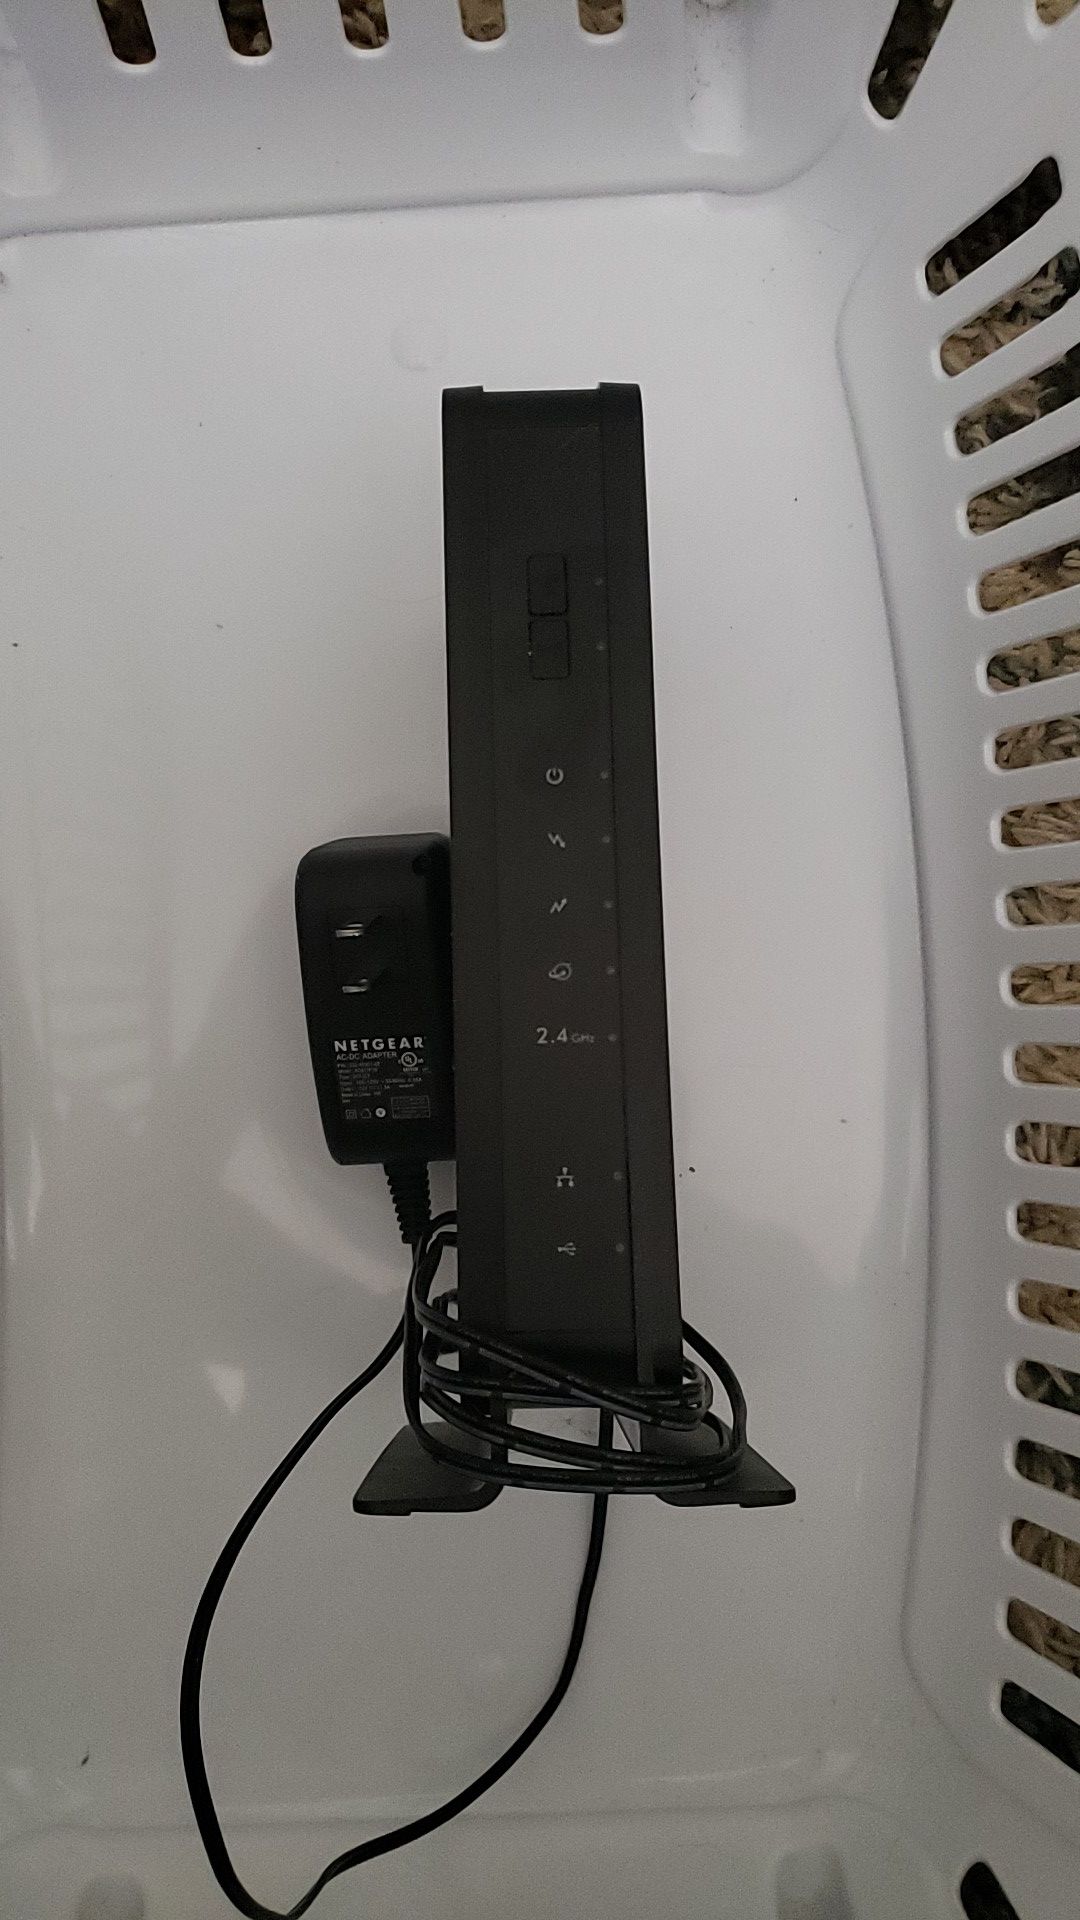 Netgear N300 WiFi Cable Modem Router Model C300